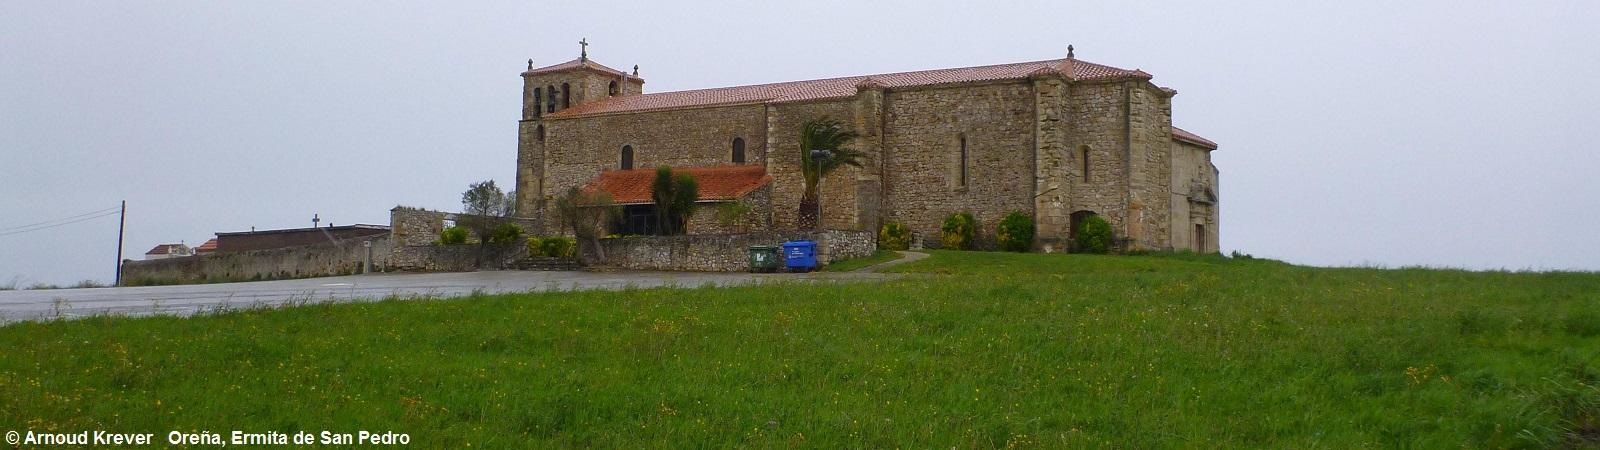 2012 Costa-Norte (793) Ermita de San Pedro bij Oreña